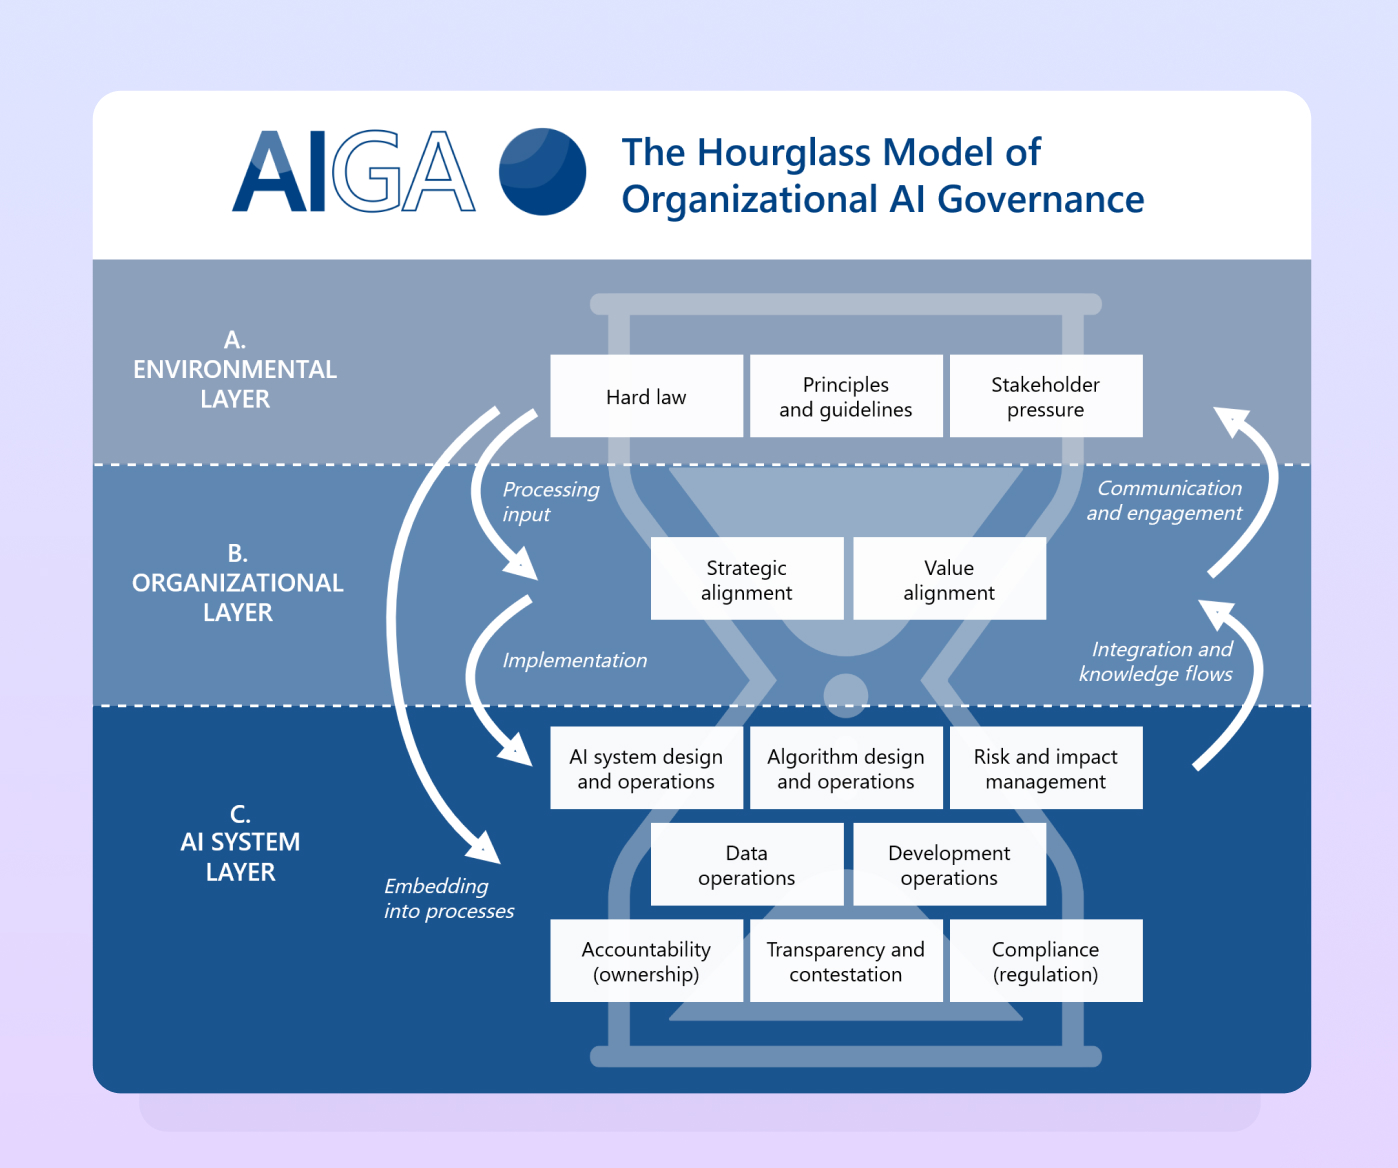 The Hourglass Model of Organizational AI Governance